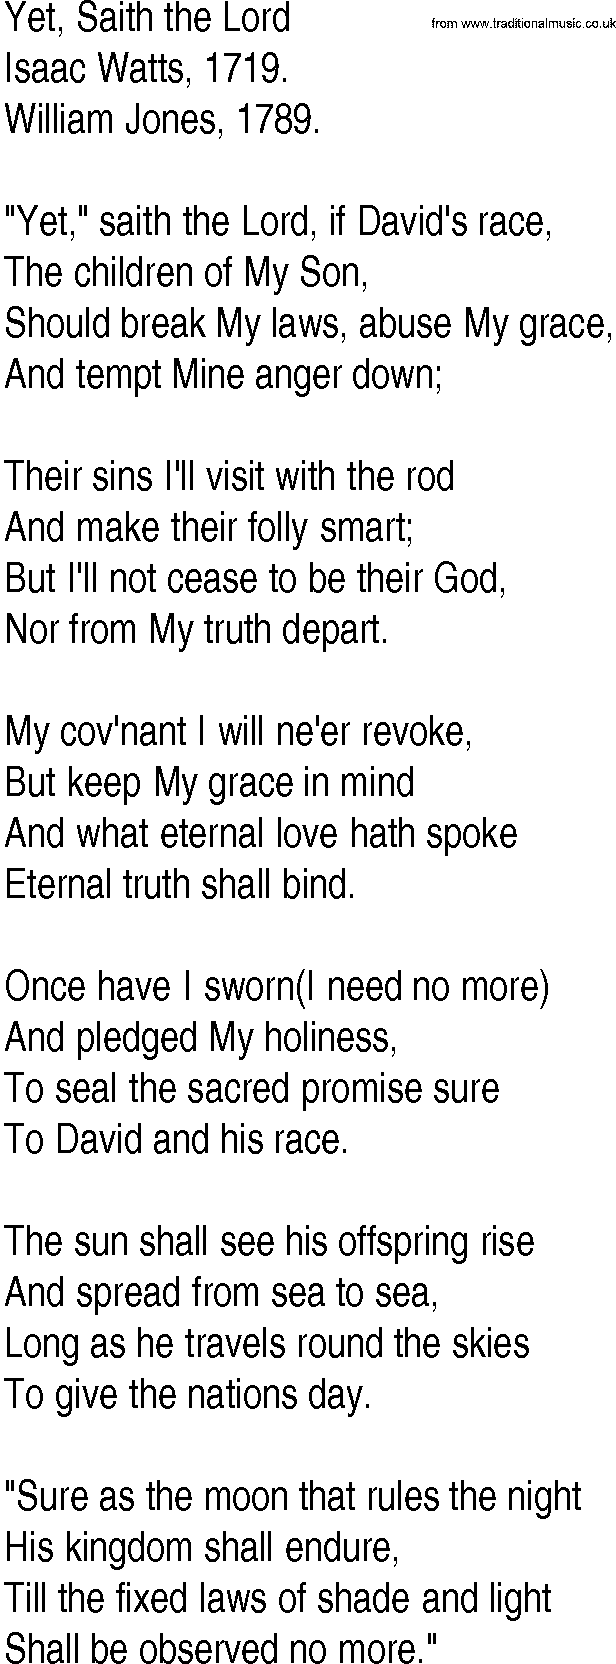 Hymn and Gospel Song: Yet, Saith the Lord by Isaac Watts lyrics